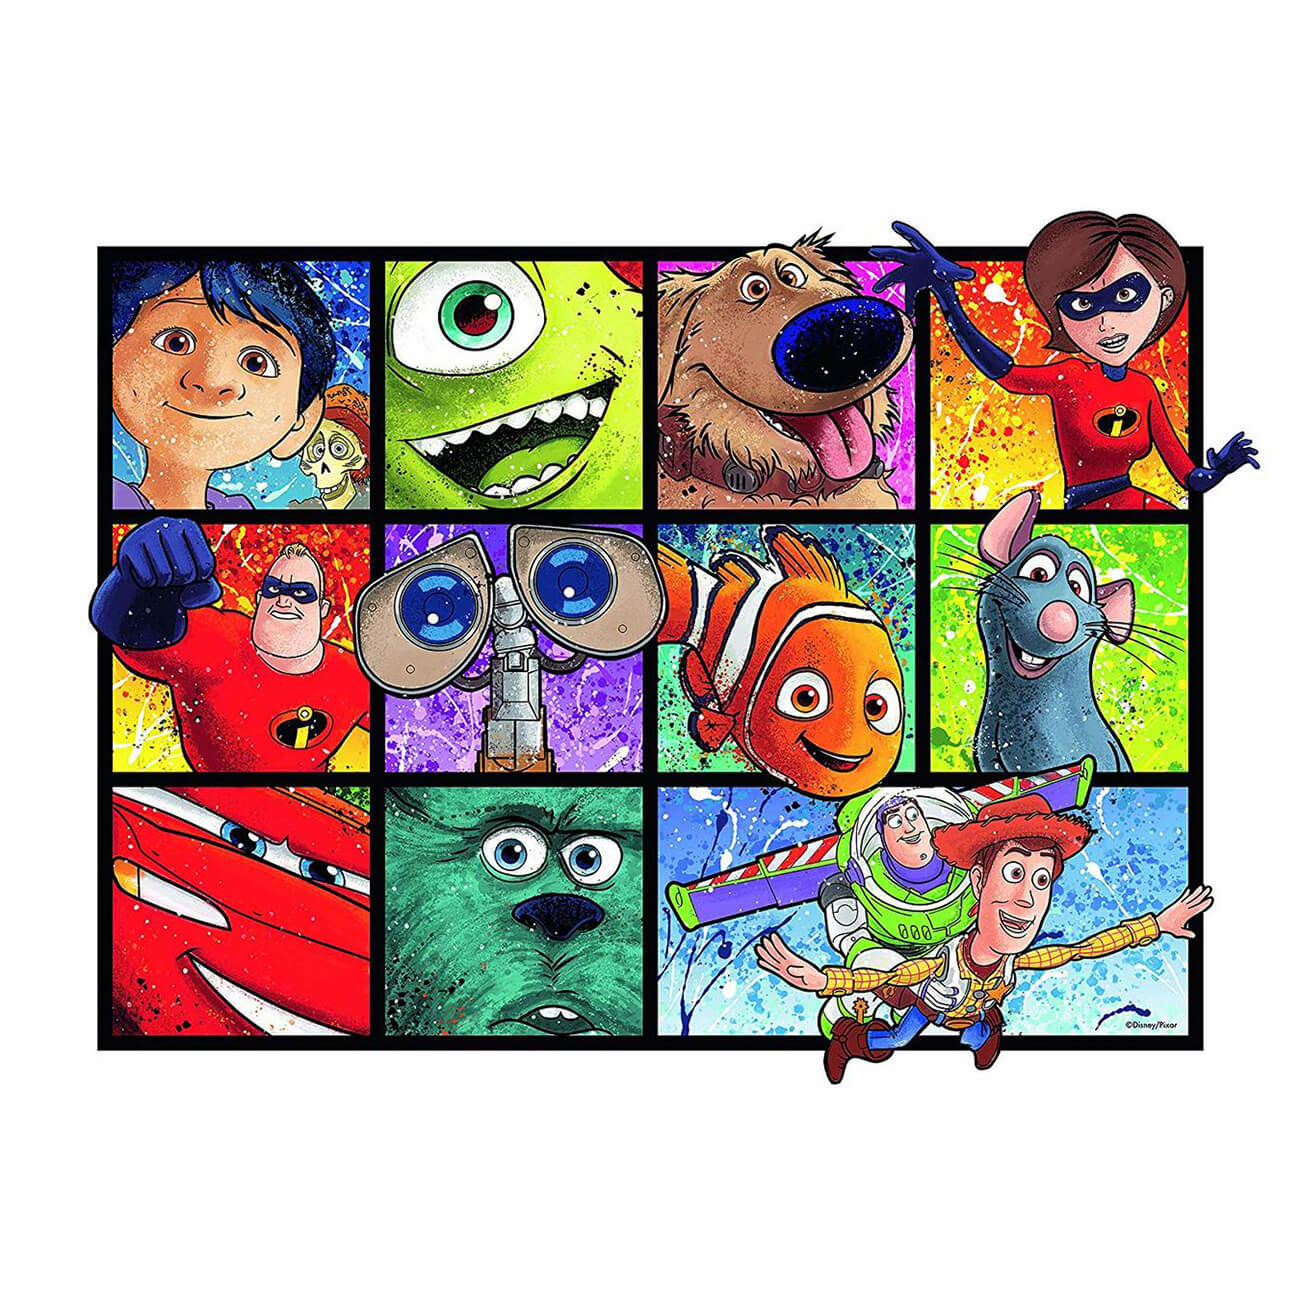 Ravensburger Disney-Pixar Splatter Art 1000 Piece Jigsaw Puzzle